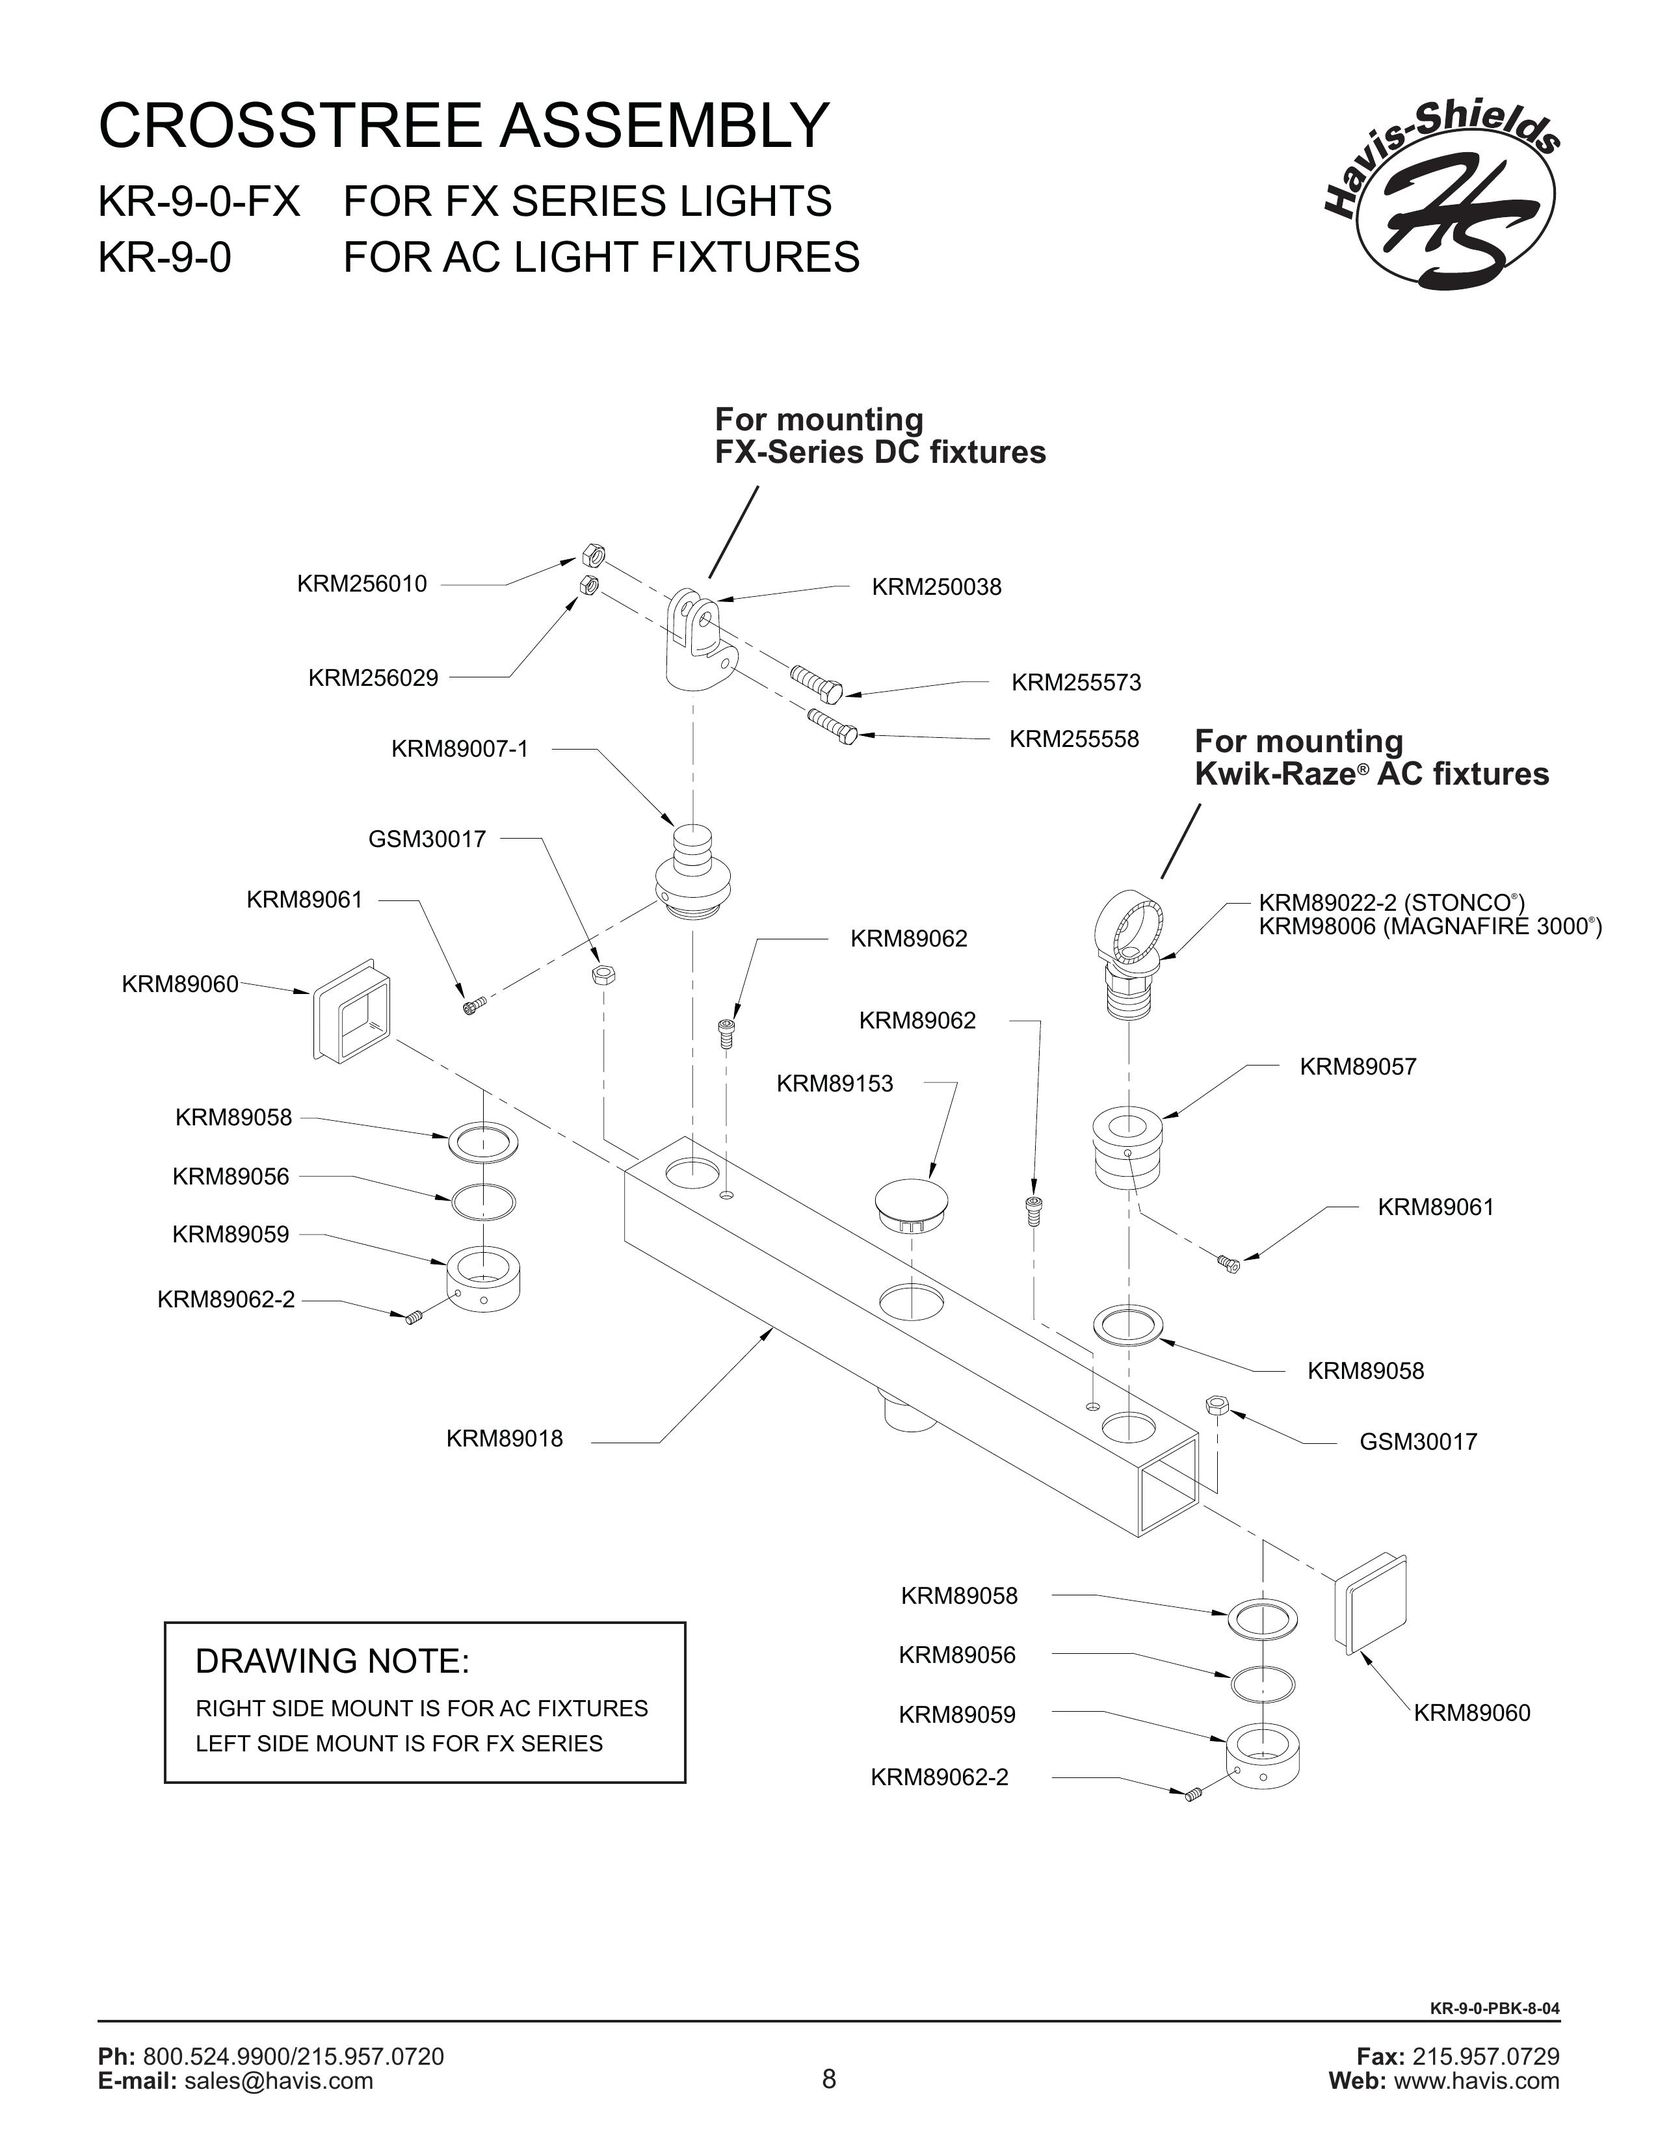 Havis-Shields KR-9-0-FX Indoor Furnishings User Manual